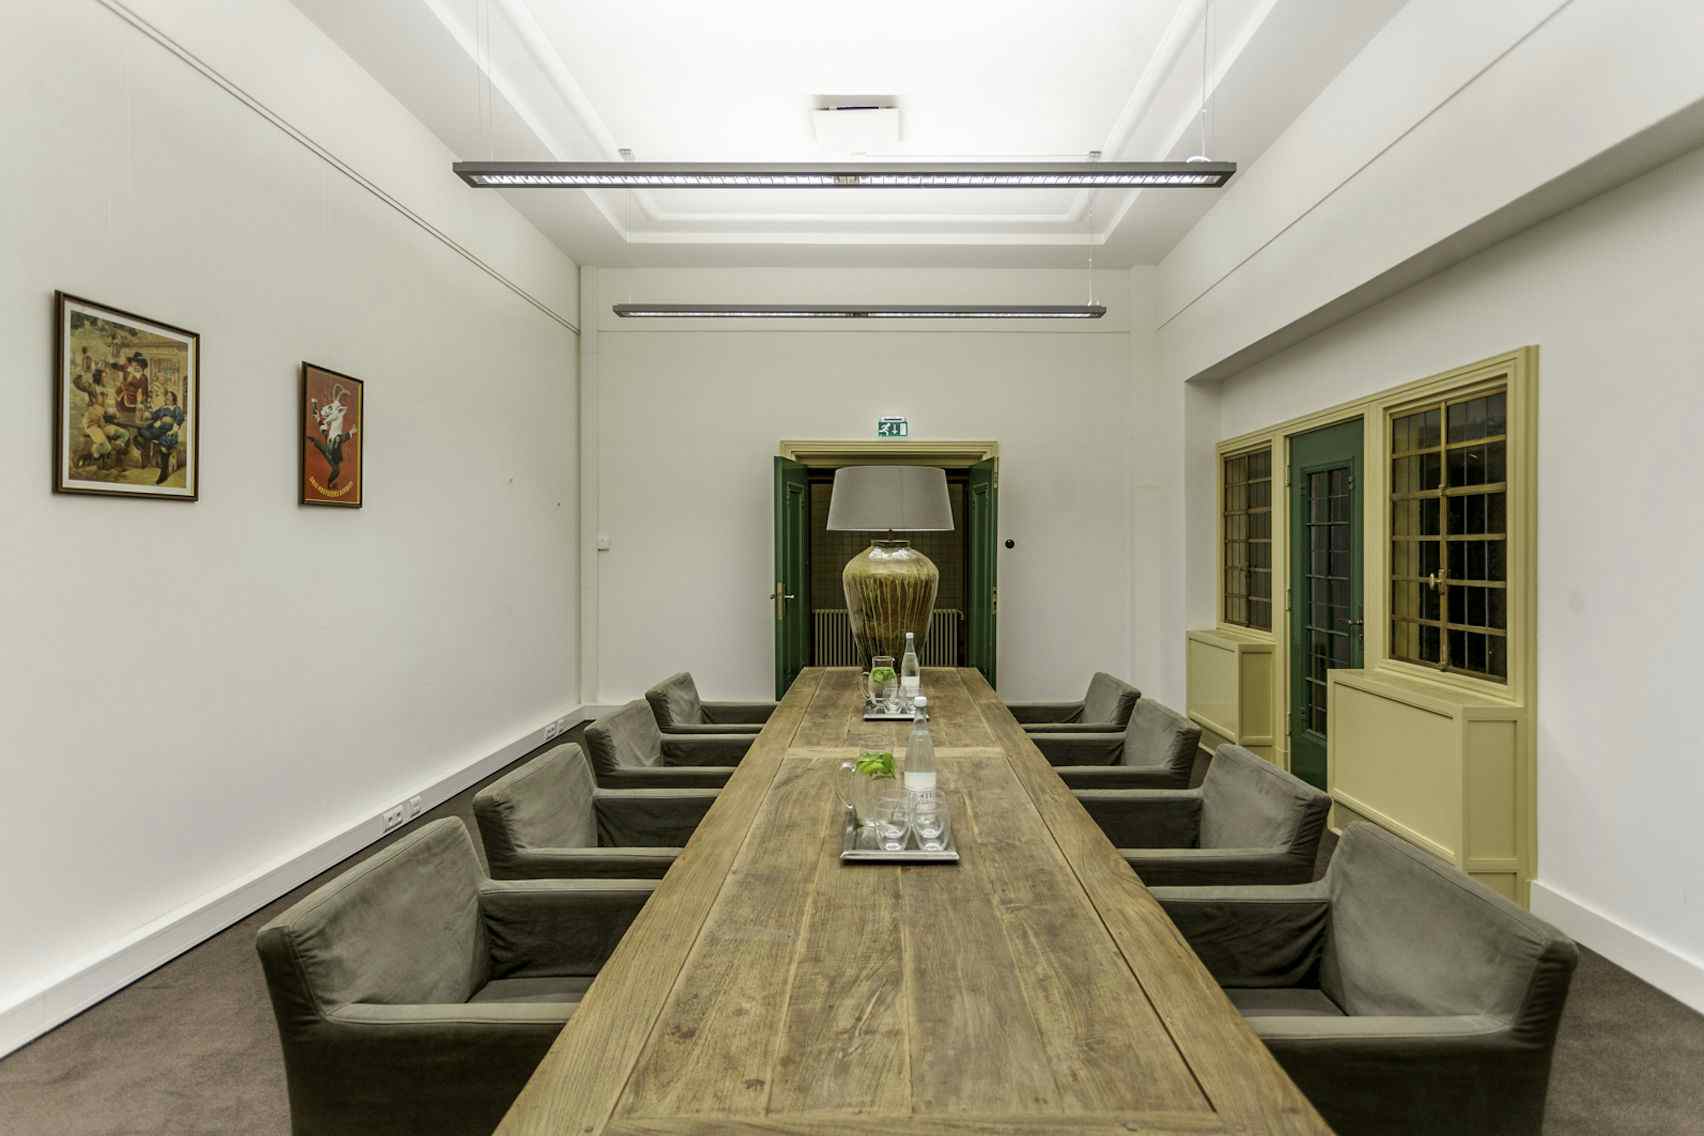 Oranjeboom Room, Offices For You Breda